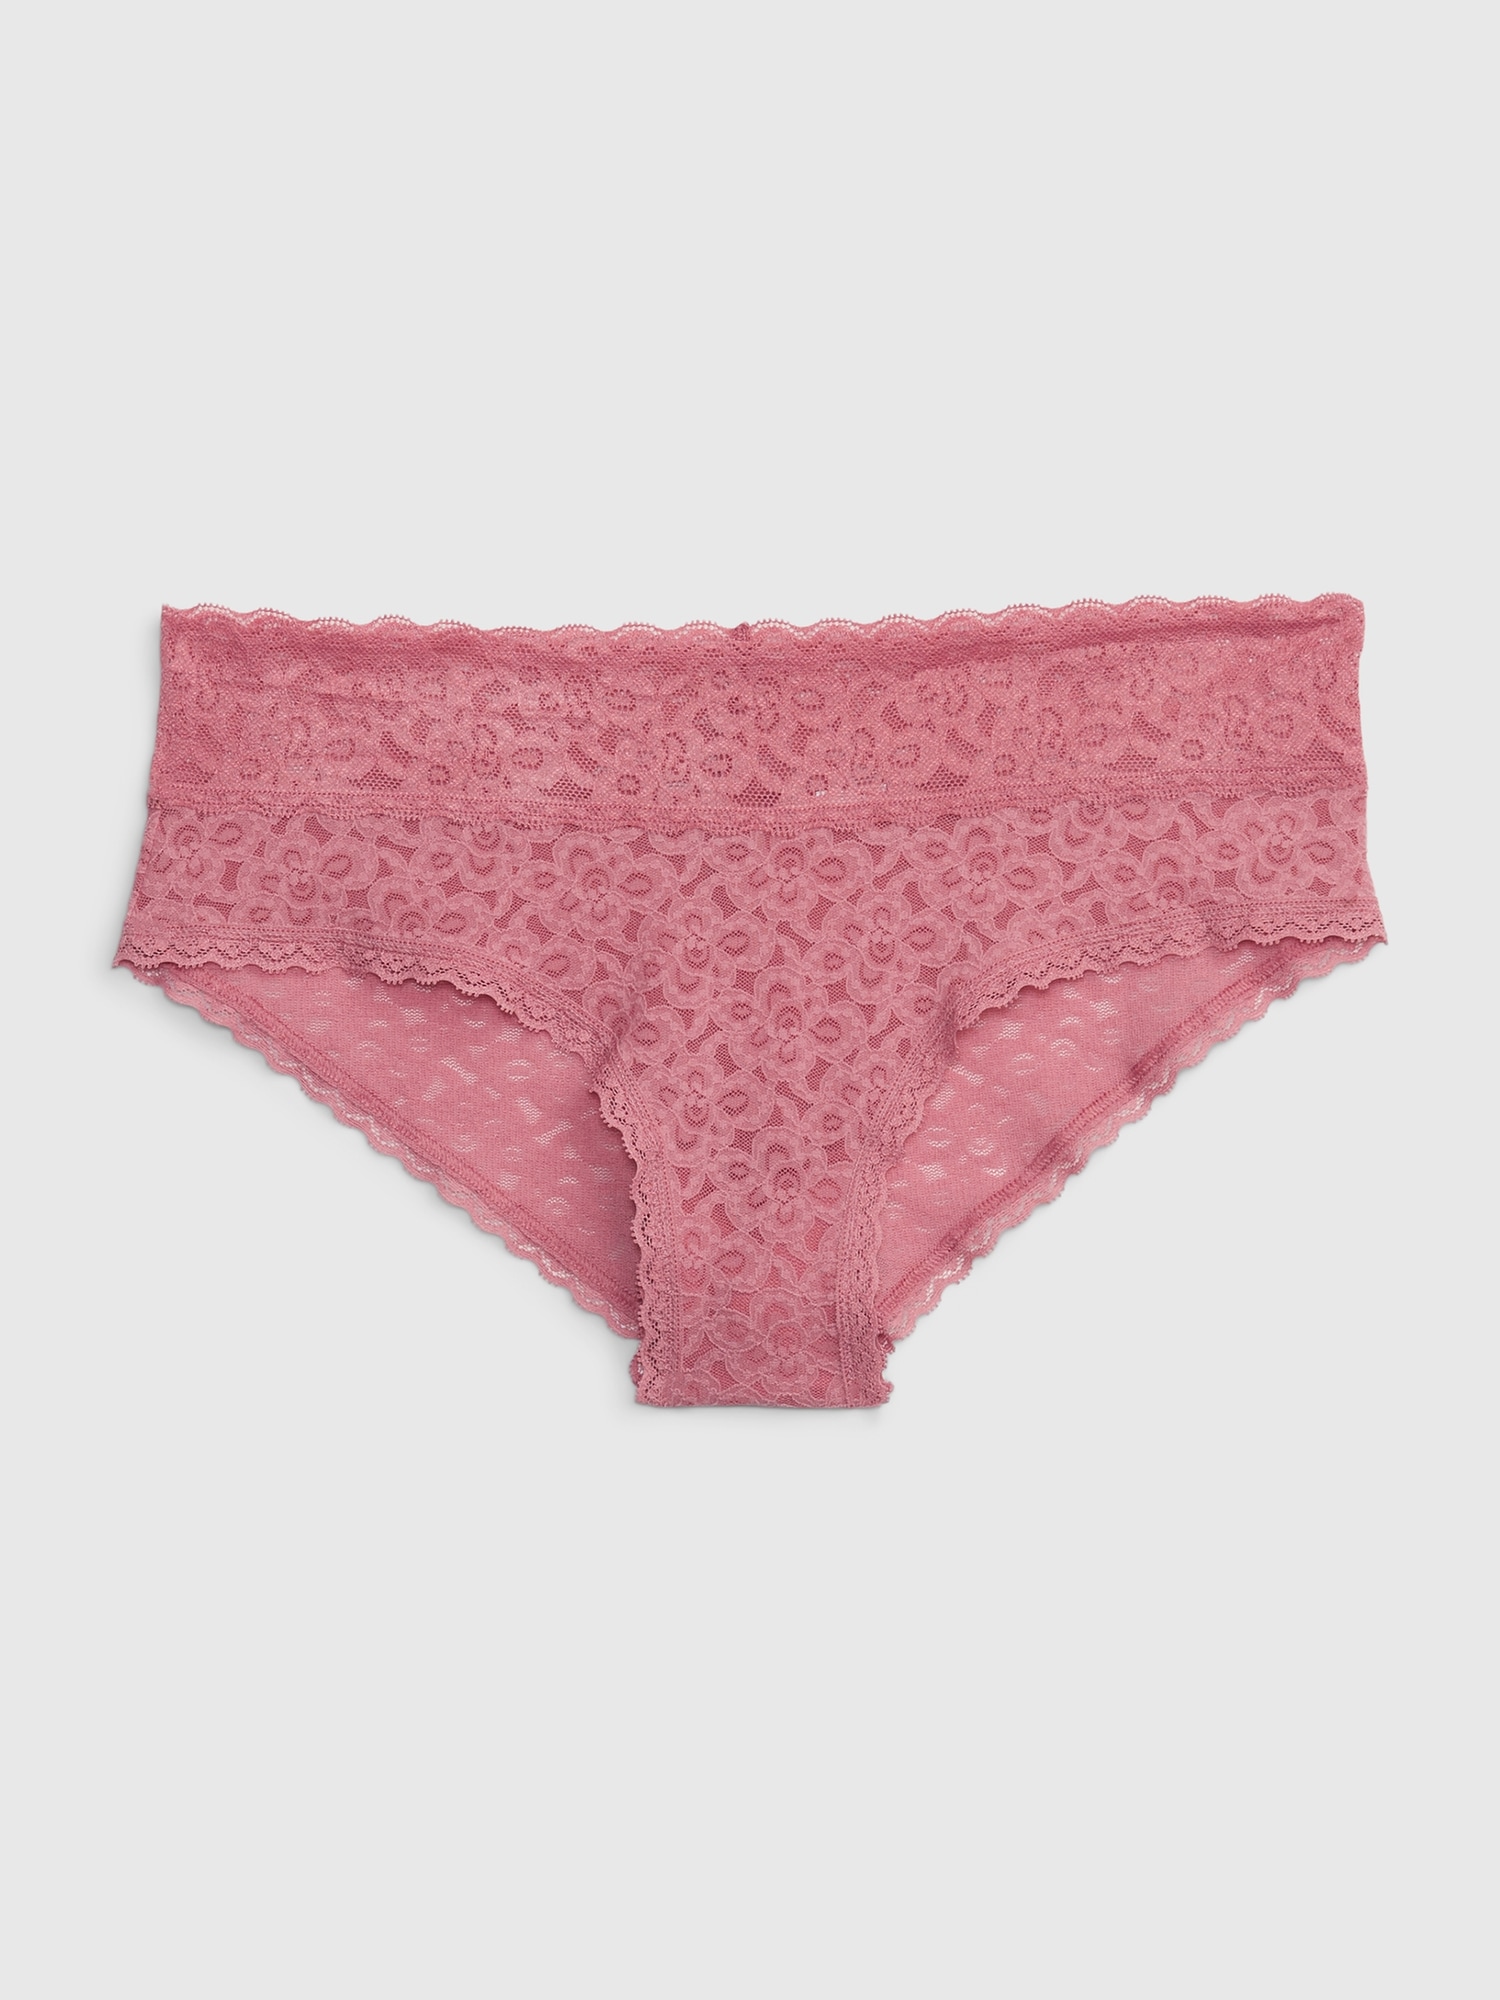 Victoria's Secret Lace Cheeky Panty Set of 3 Large Light Pink